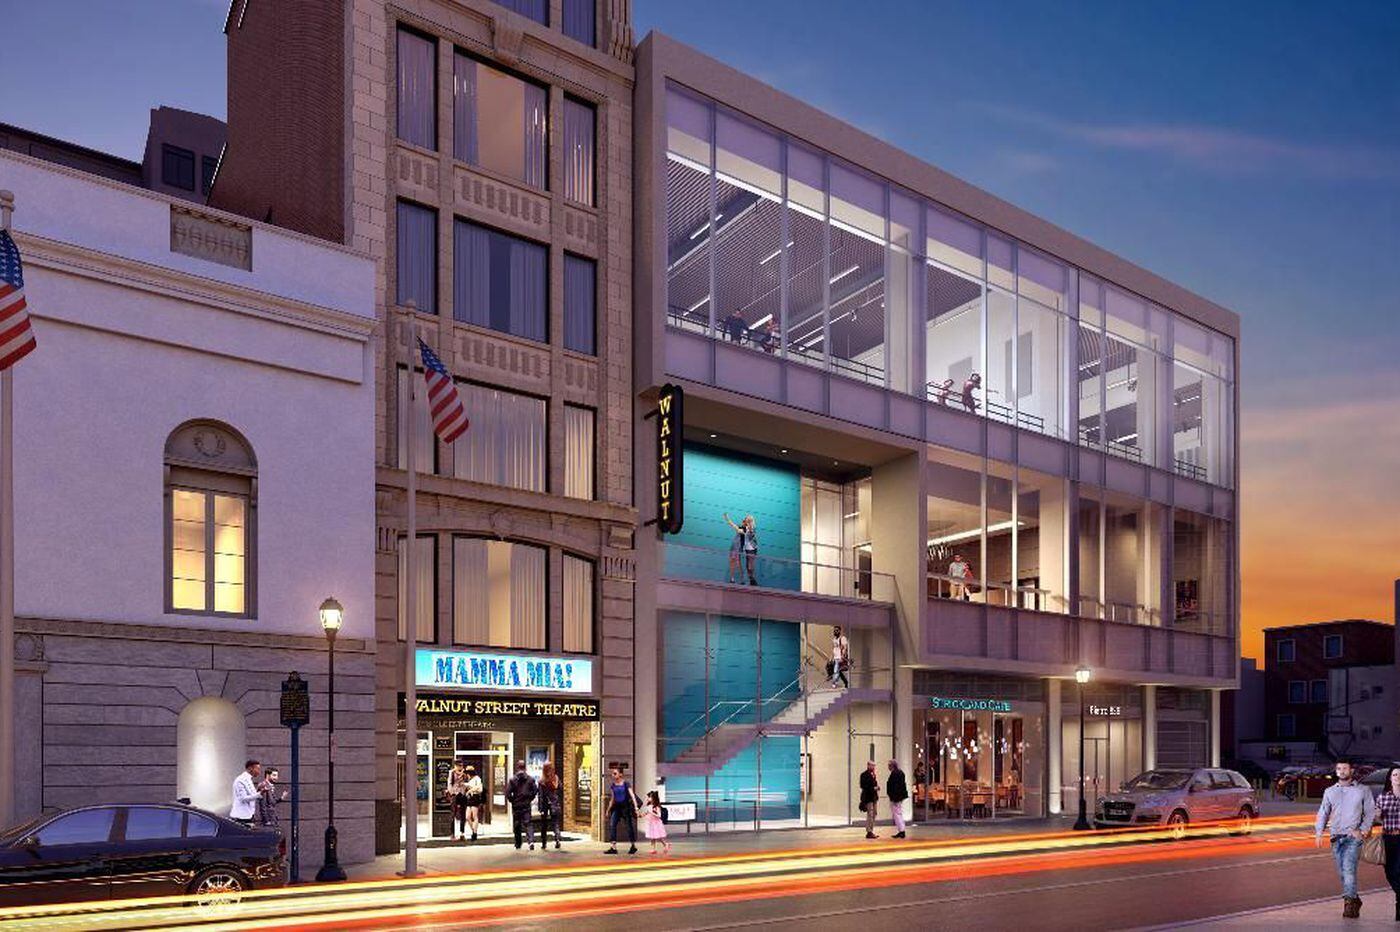 Walnut Street Theatre announces a major expansion, set to